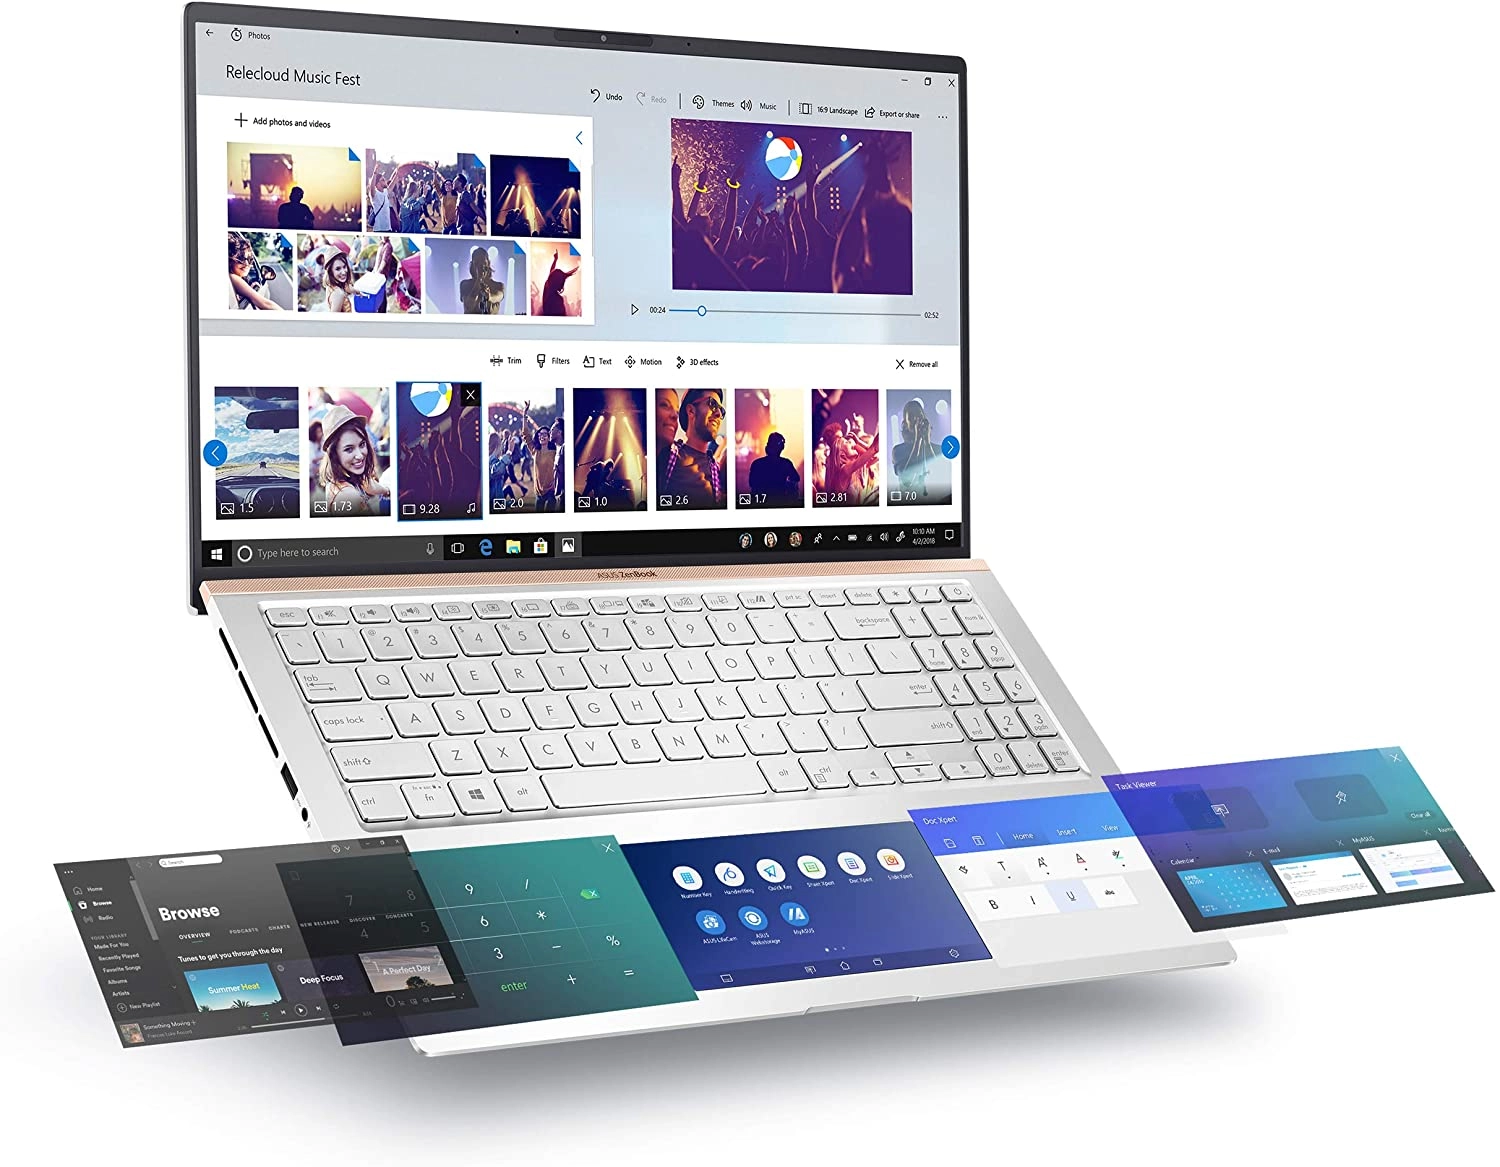 ASUS ZenBook 15 laptop image